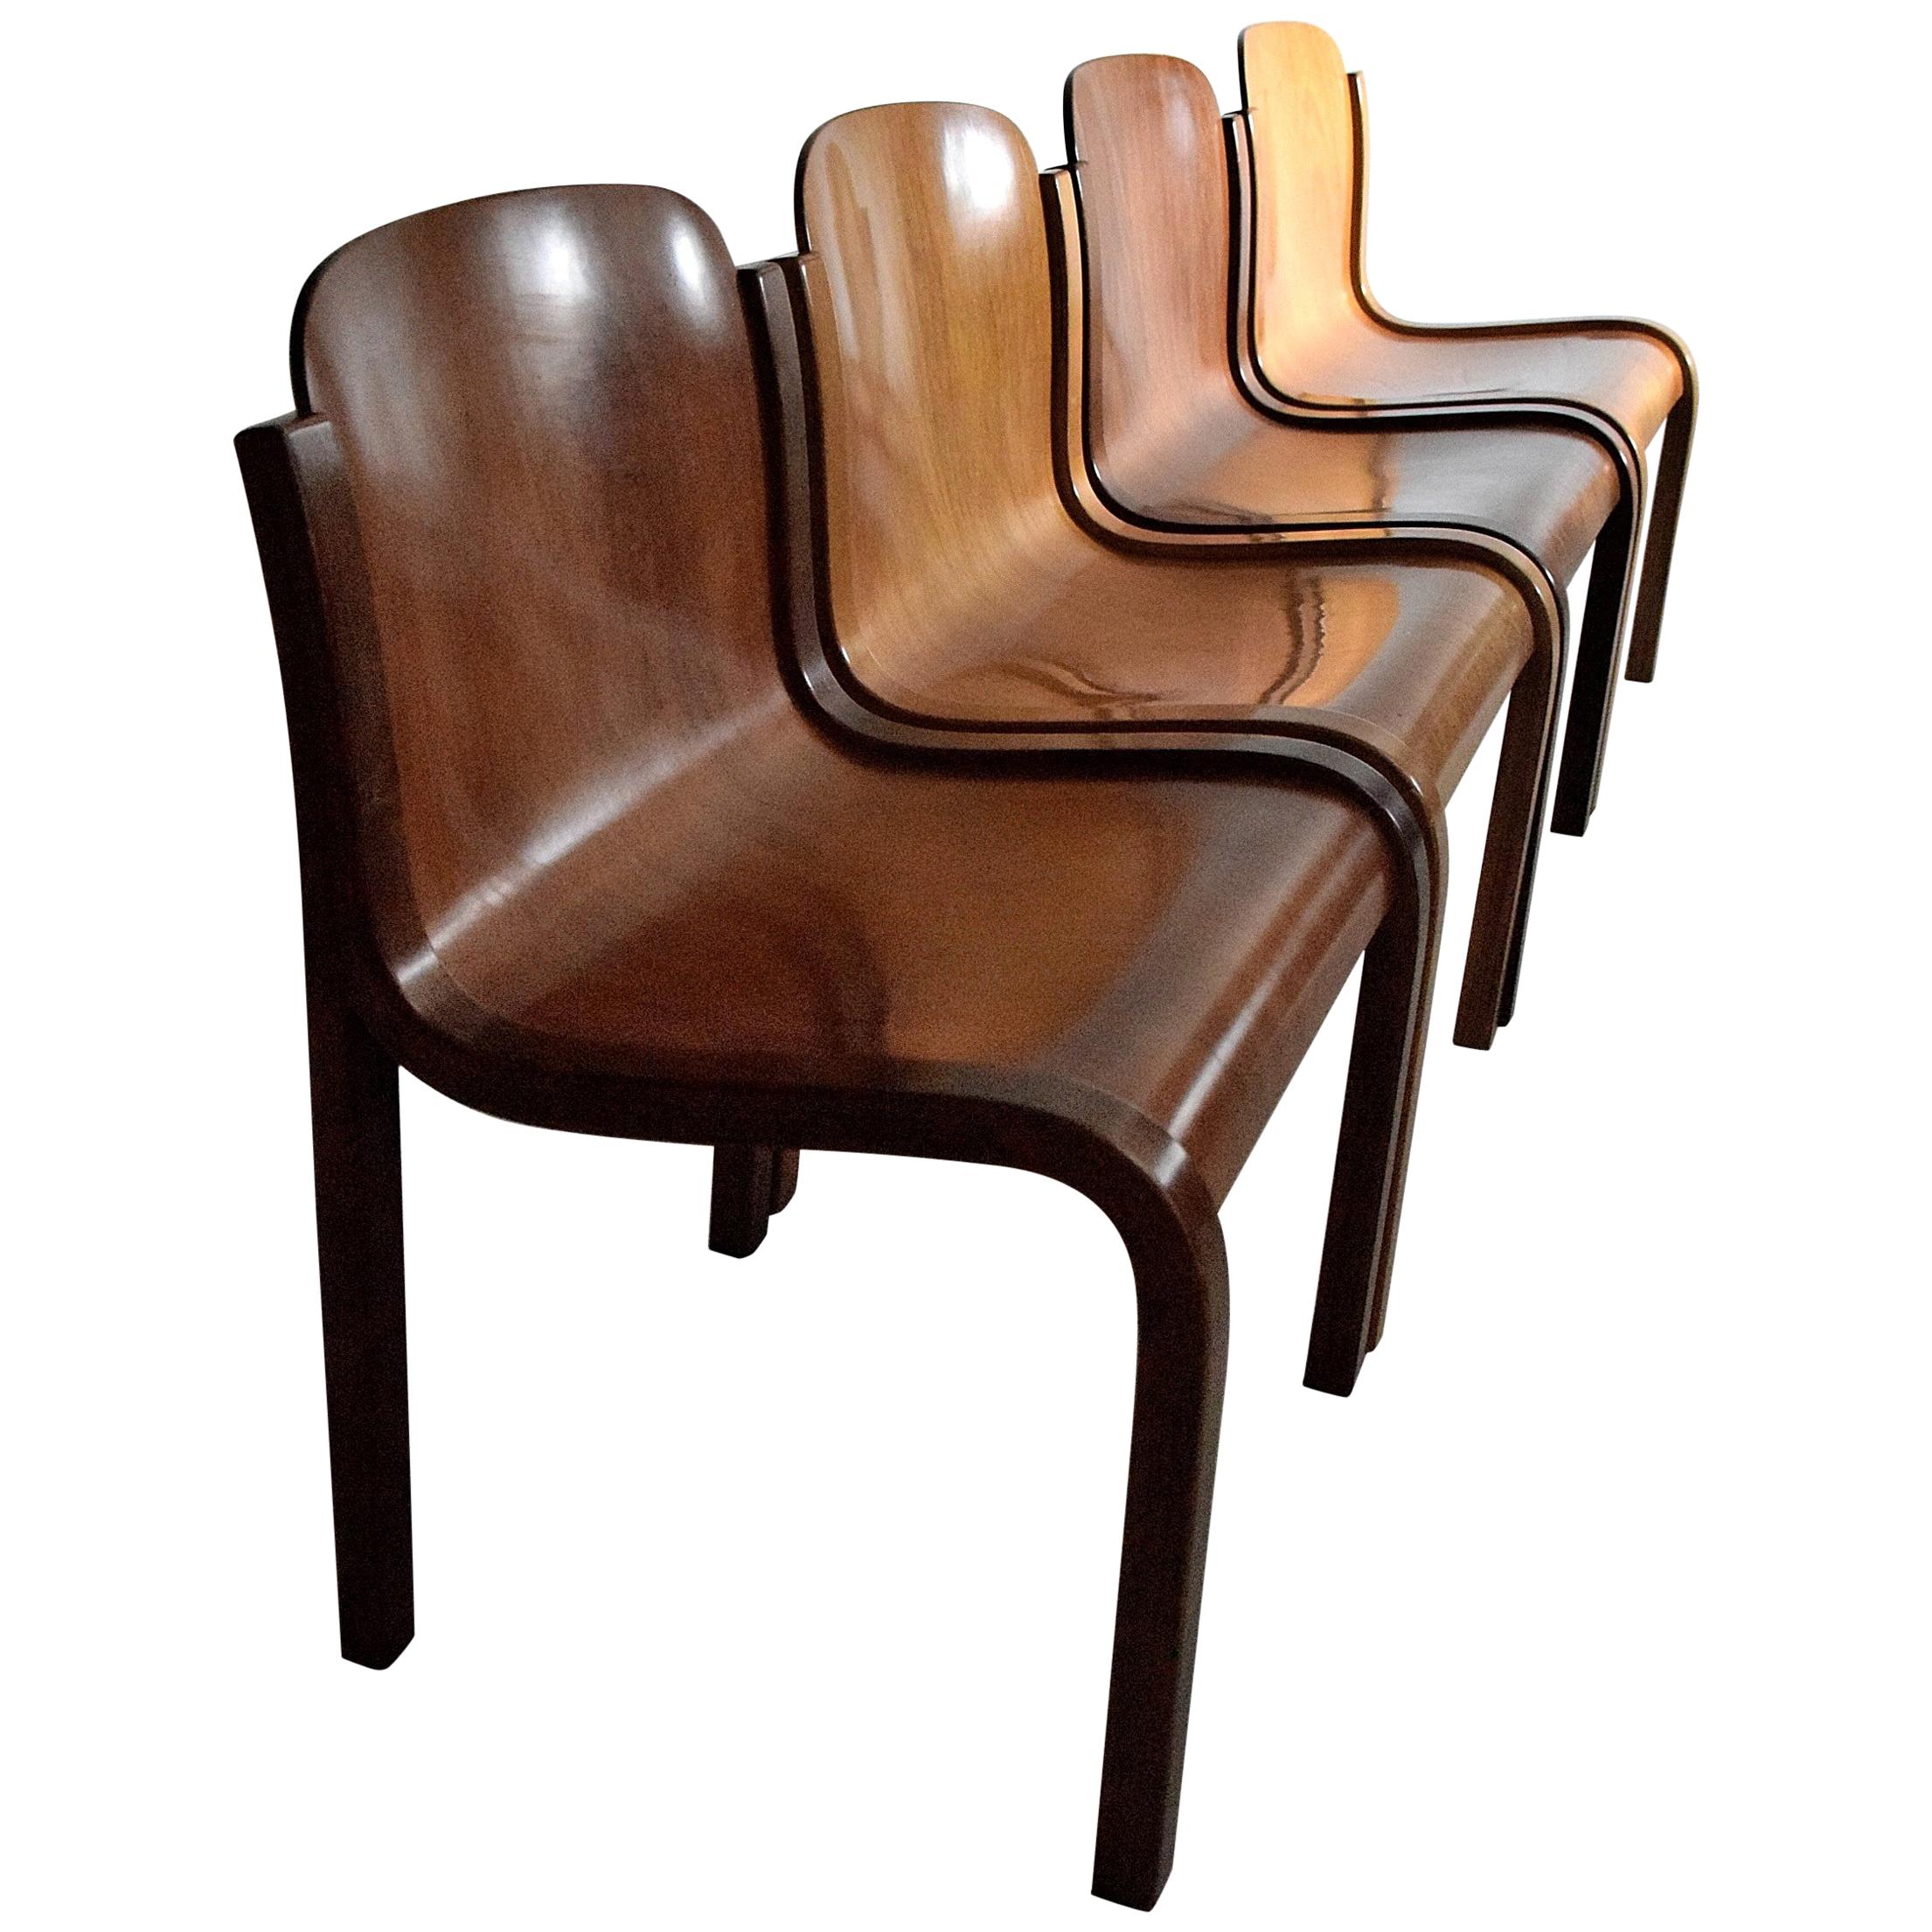 Italian Mid-Century Modern Curved Plywood Chairs by Carlo Bartoli